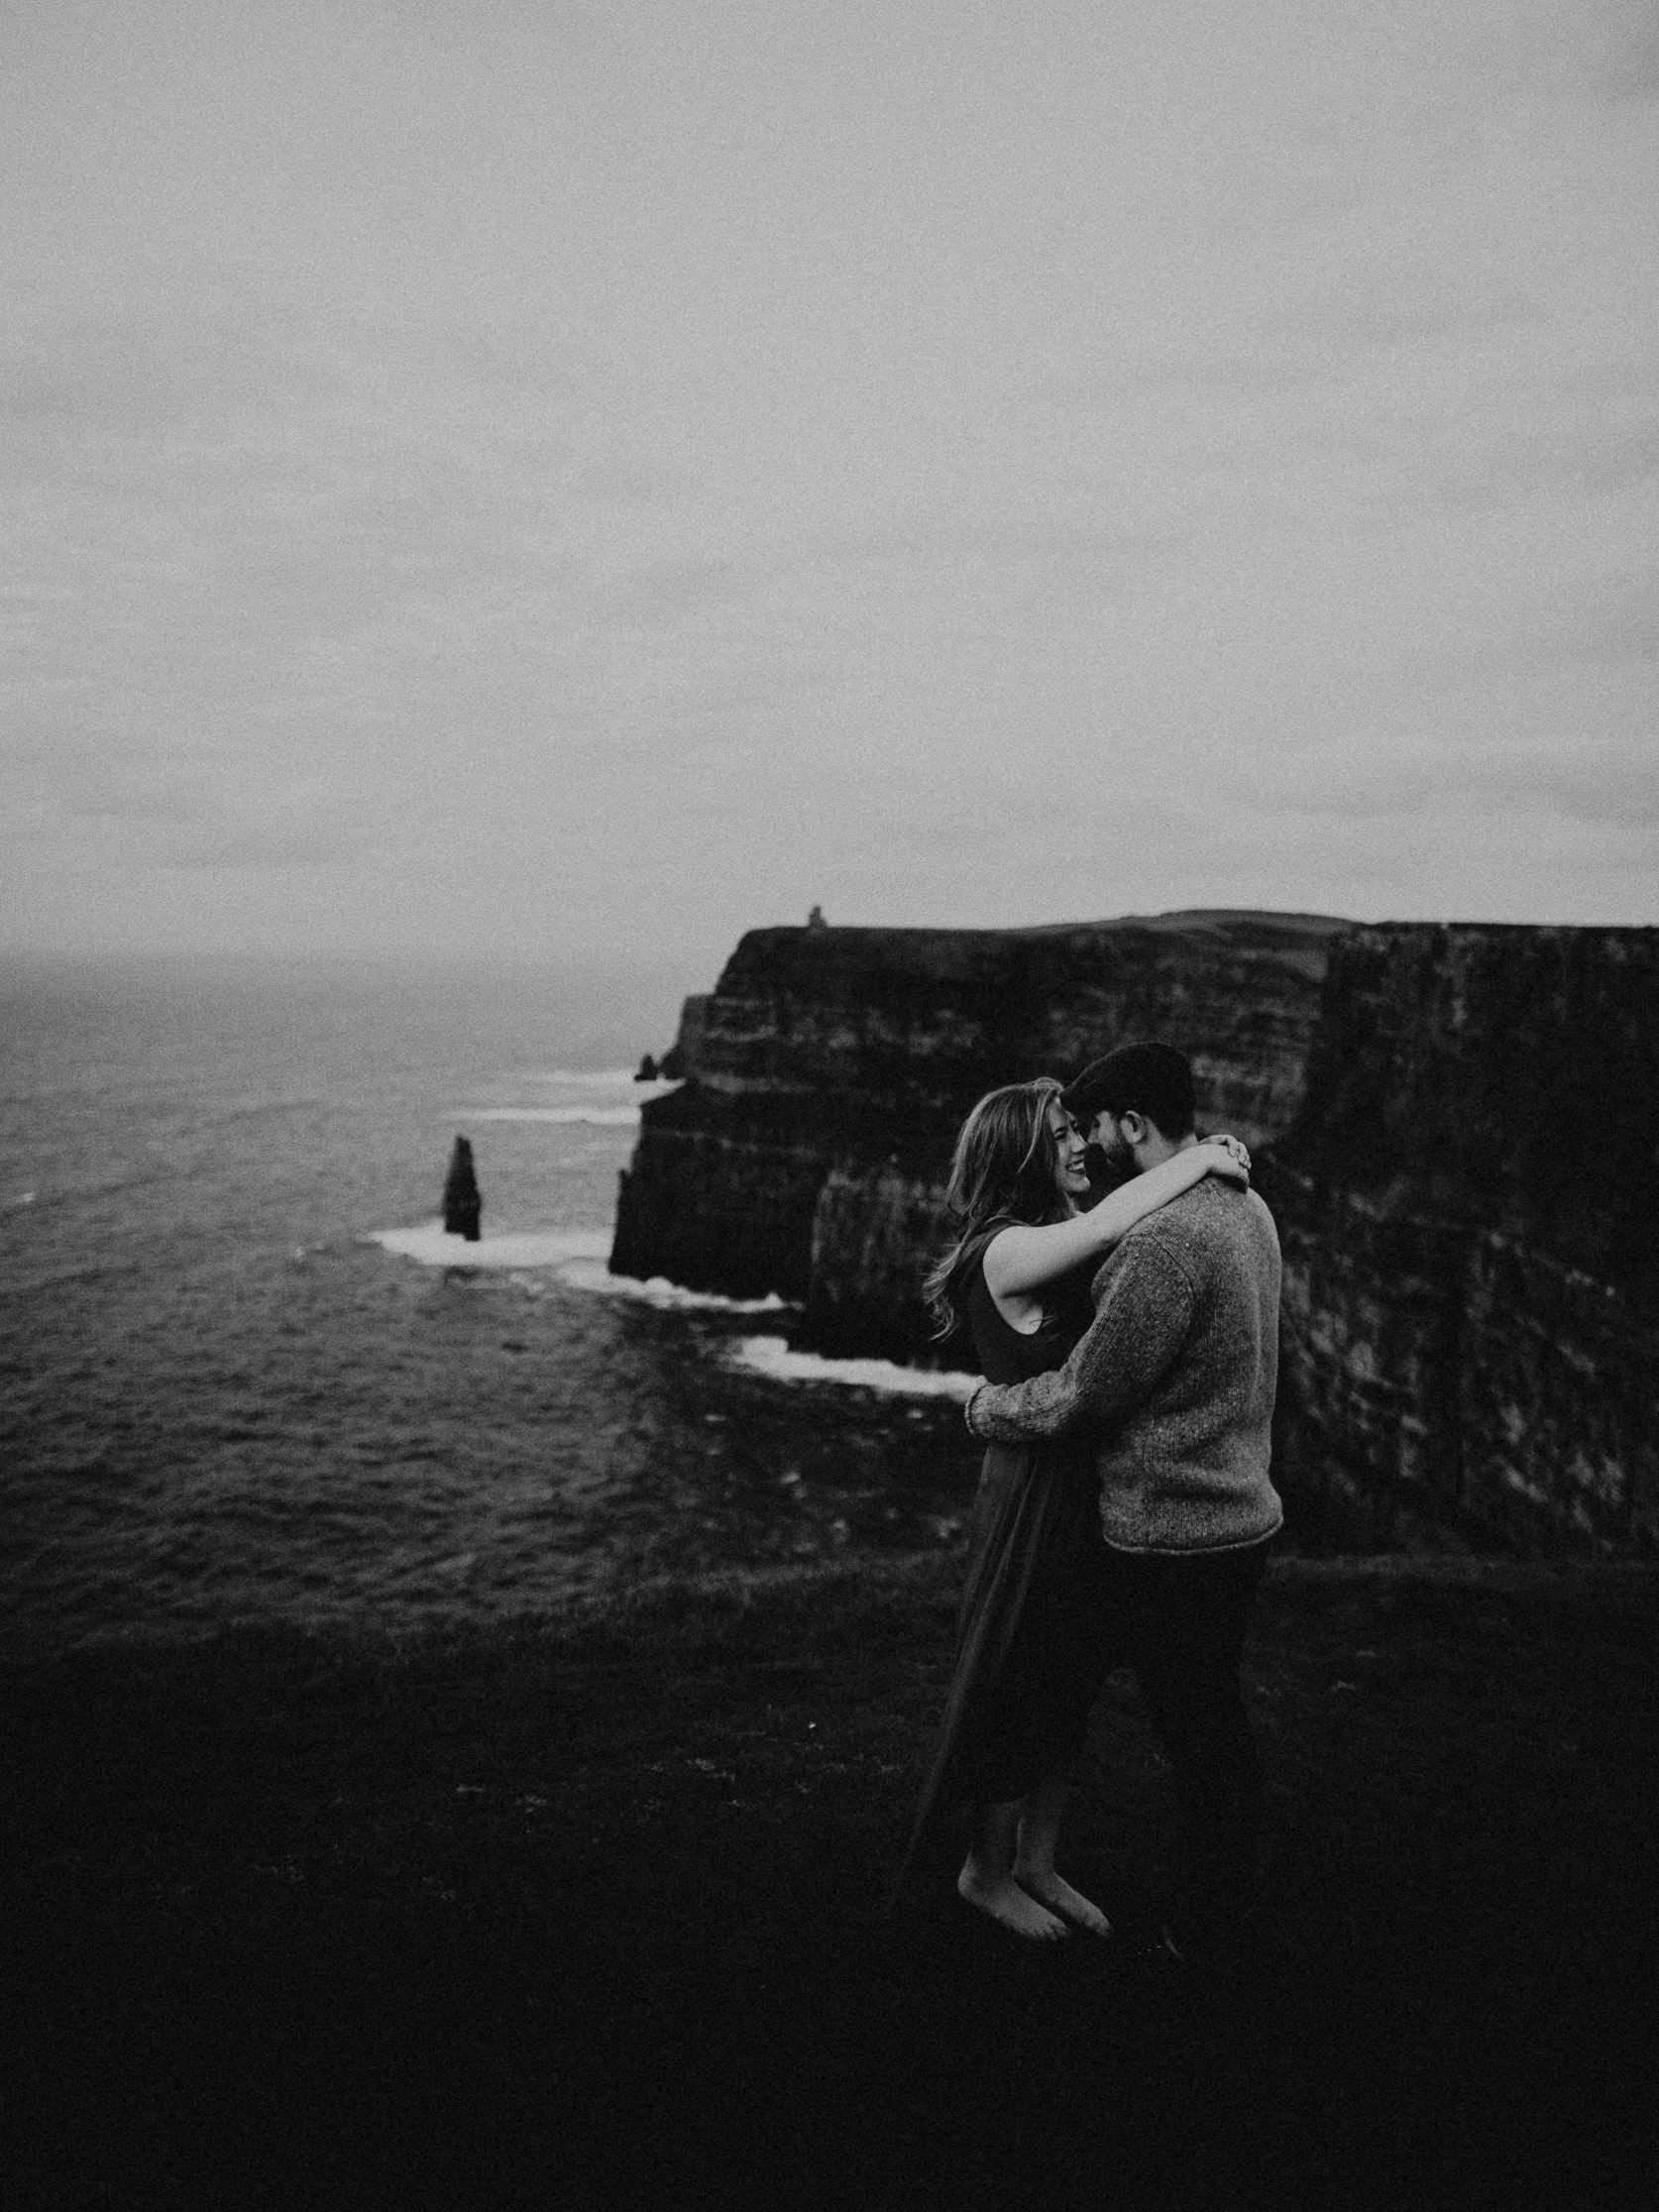  Kamra Fuller Photography - Cliffs of Moher, Claregalway - Cliffs of Moher Engagement Session - Cliffs of Moher Couple's Session - Ireland Wedding Photographer - Europe Wedding Photographer - Spain Wedding Photographer - UK Wedding Photographer - Sea